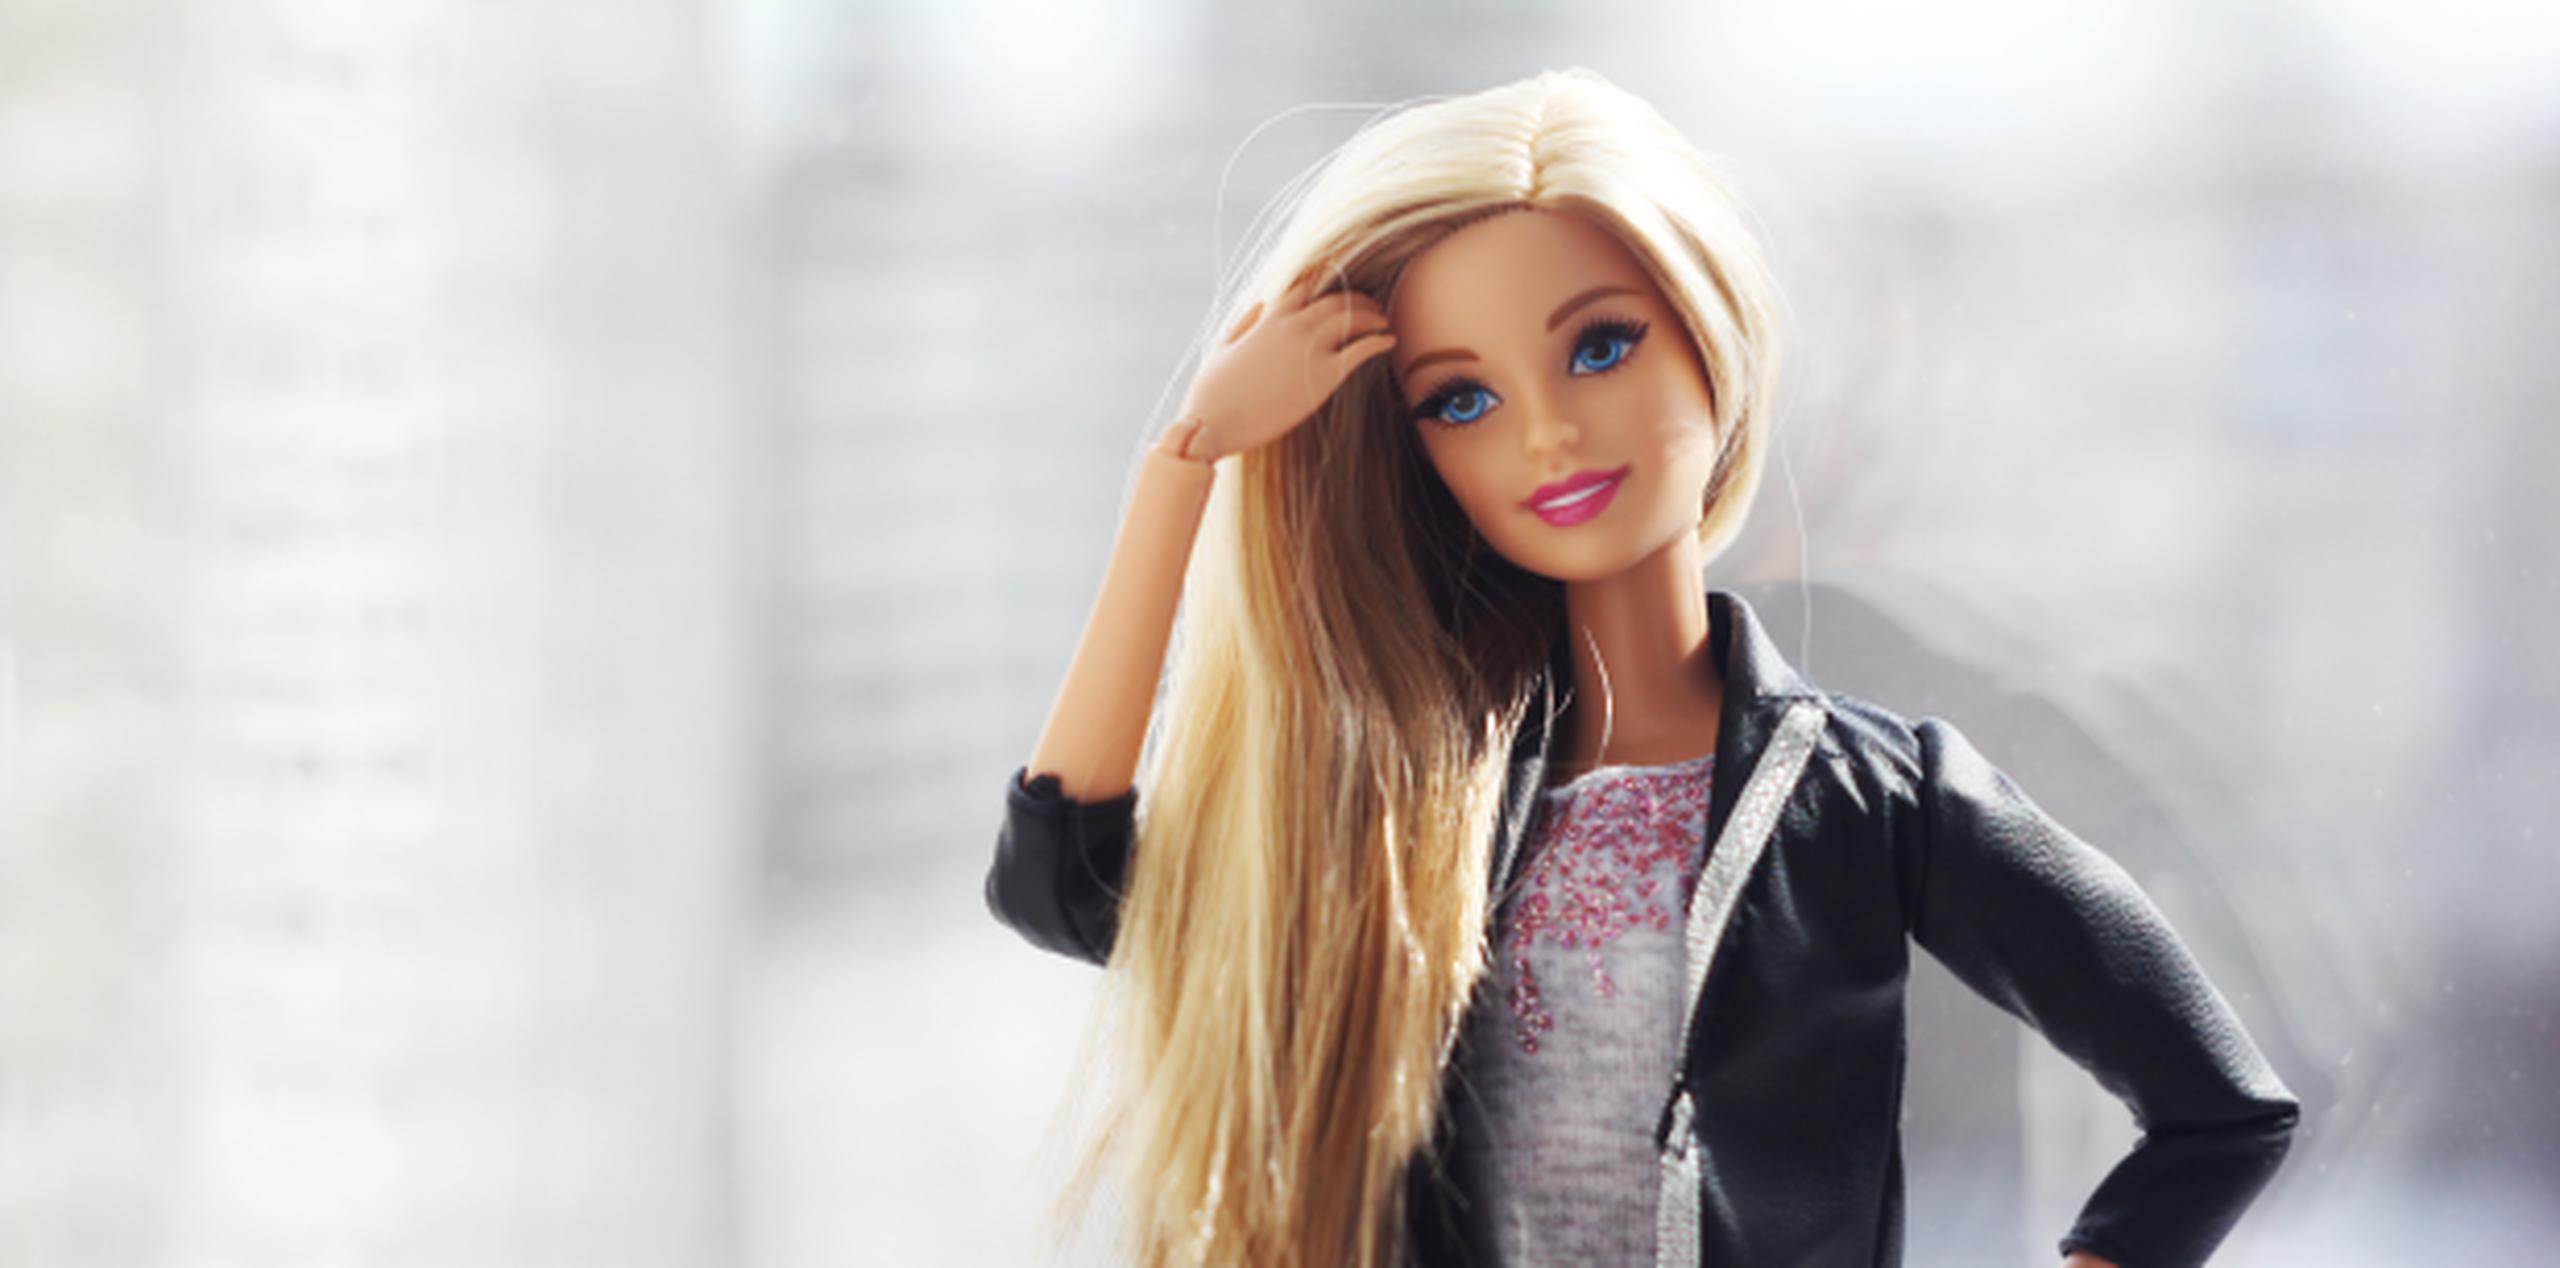 La muñeca Barbie. (Shutterstock)